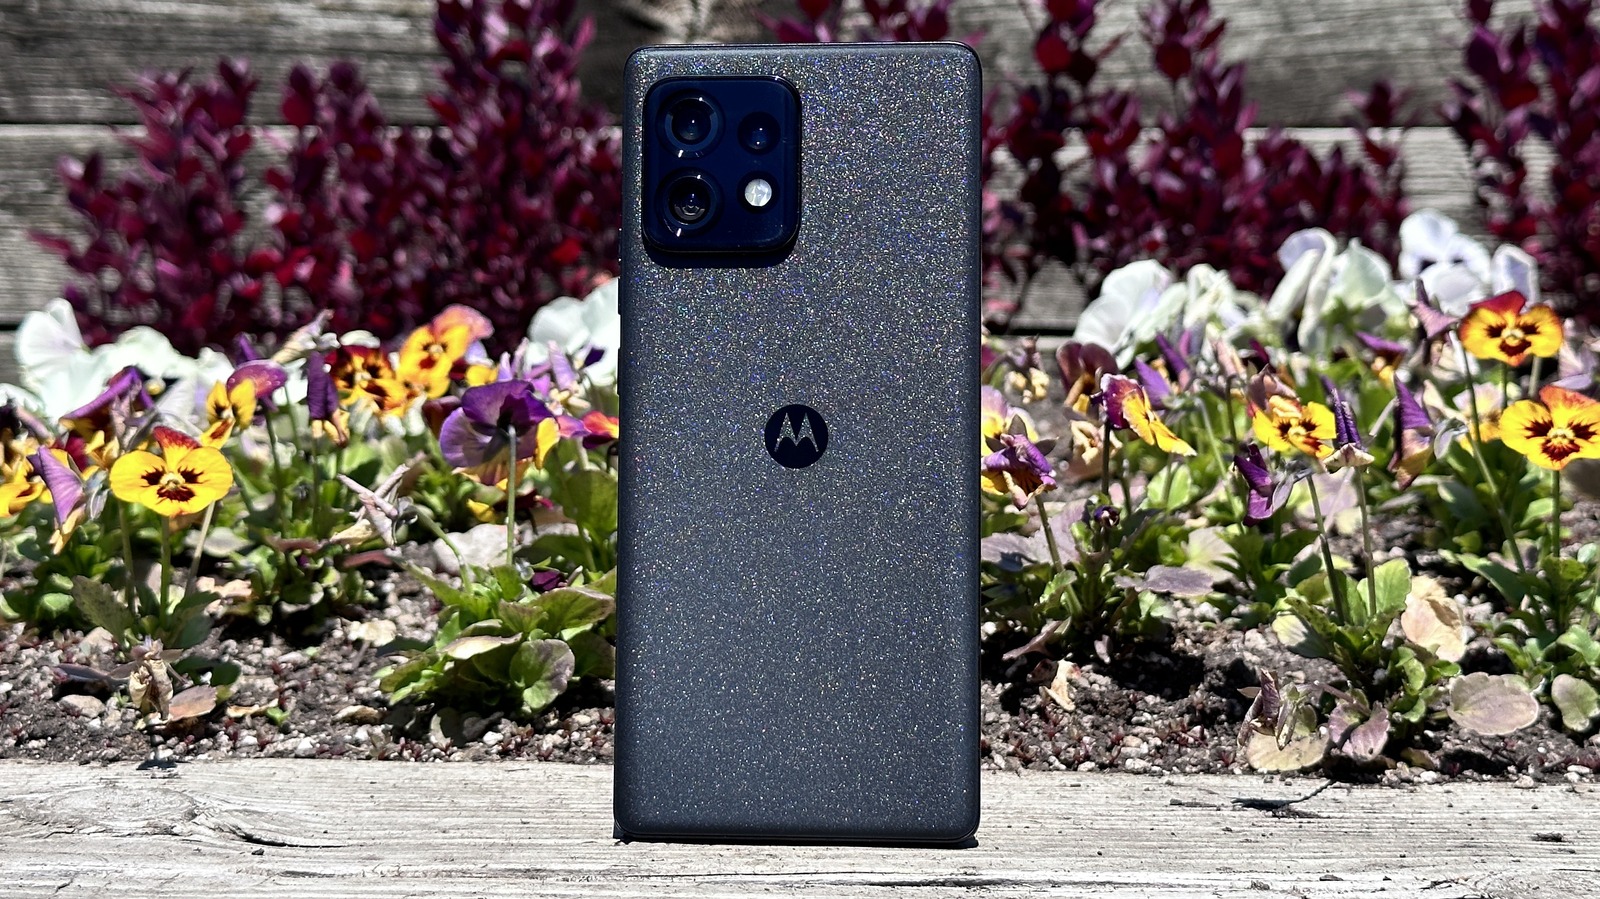 Motorola Edge (2023) Review